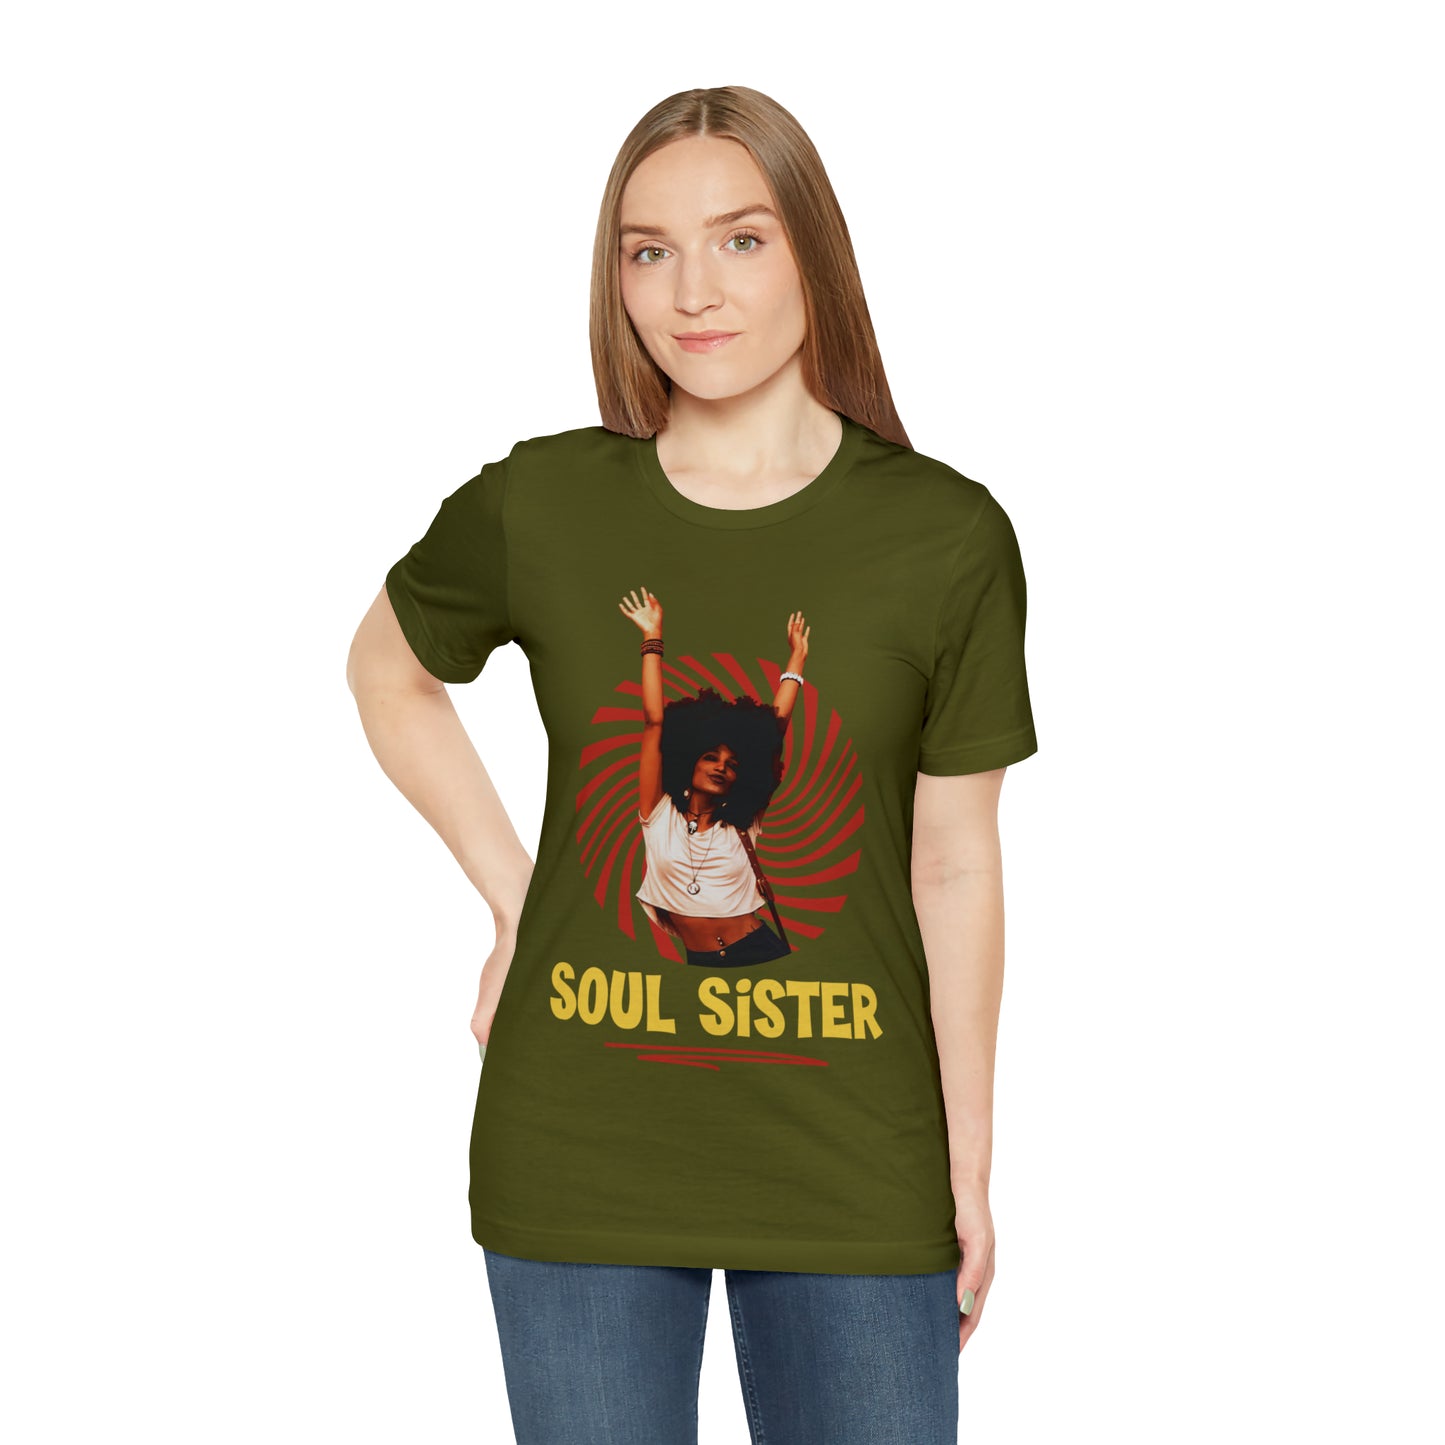 Afro Soul T-Shirt